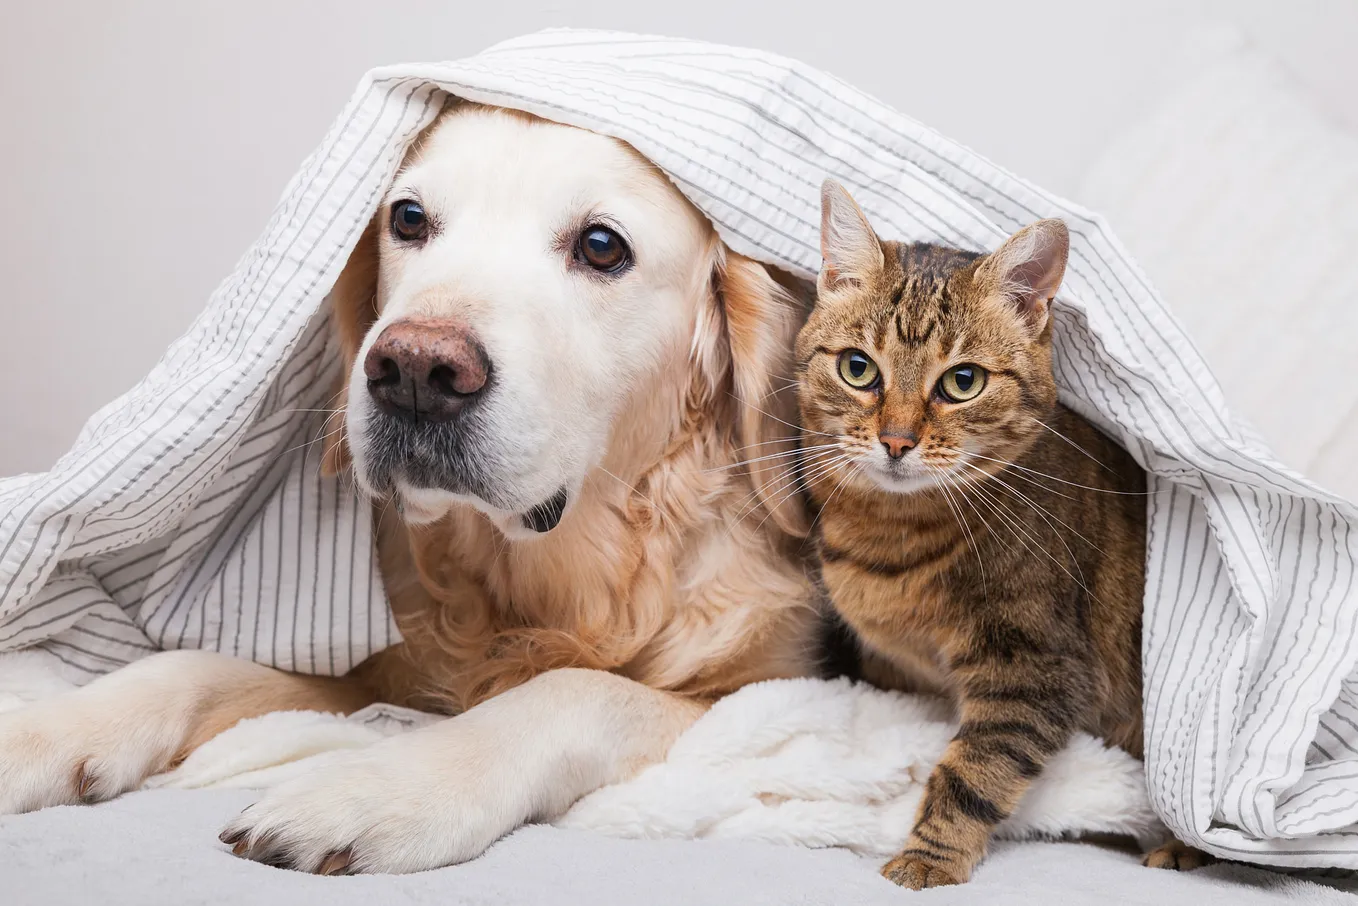 How Meowtel Became the Go-To Cat-Sitting Service Despite Dog-Loving Investors!